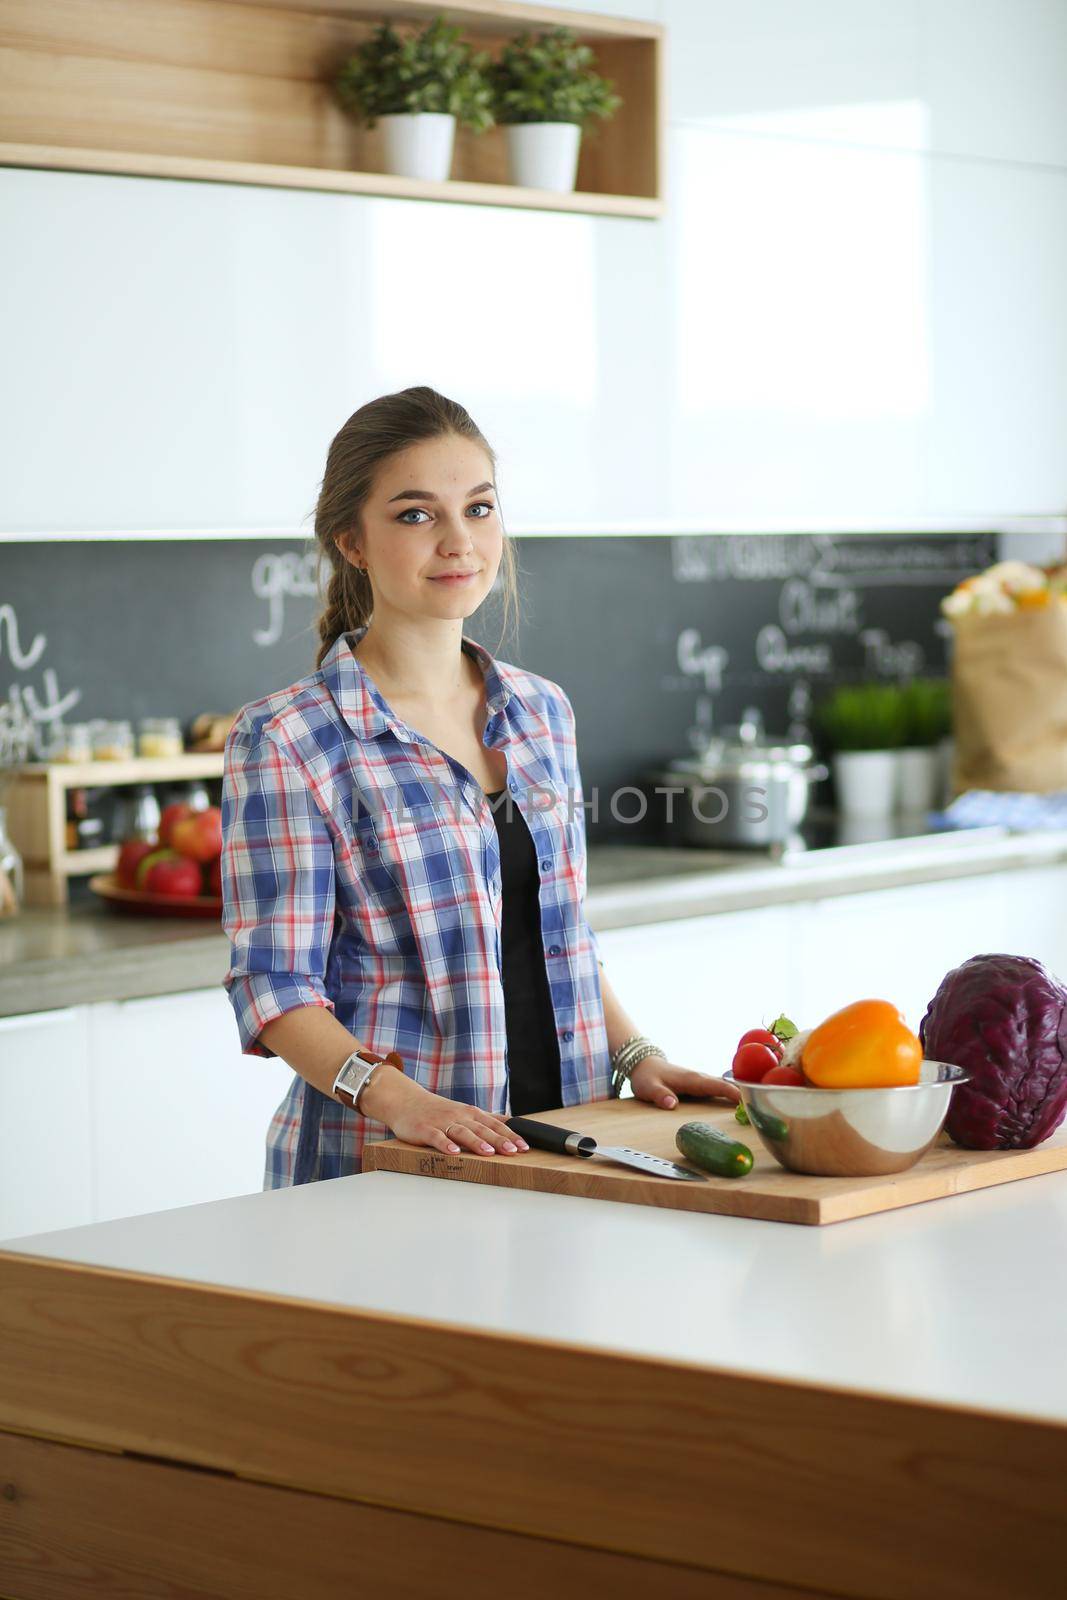 Young woman cutting vegetables in kitchen near desk. by lenetstan